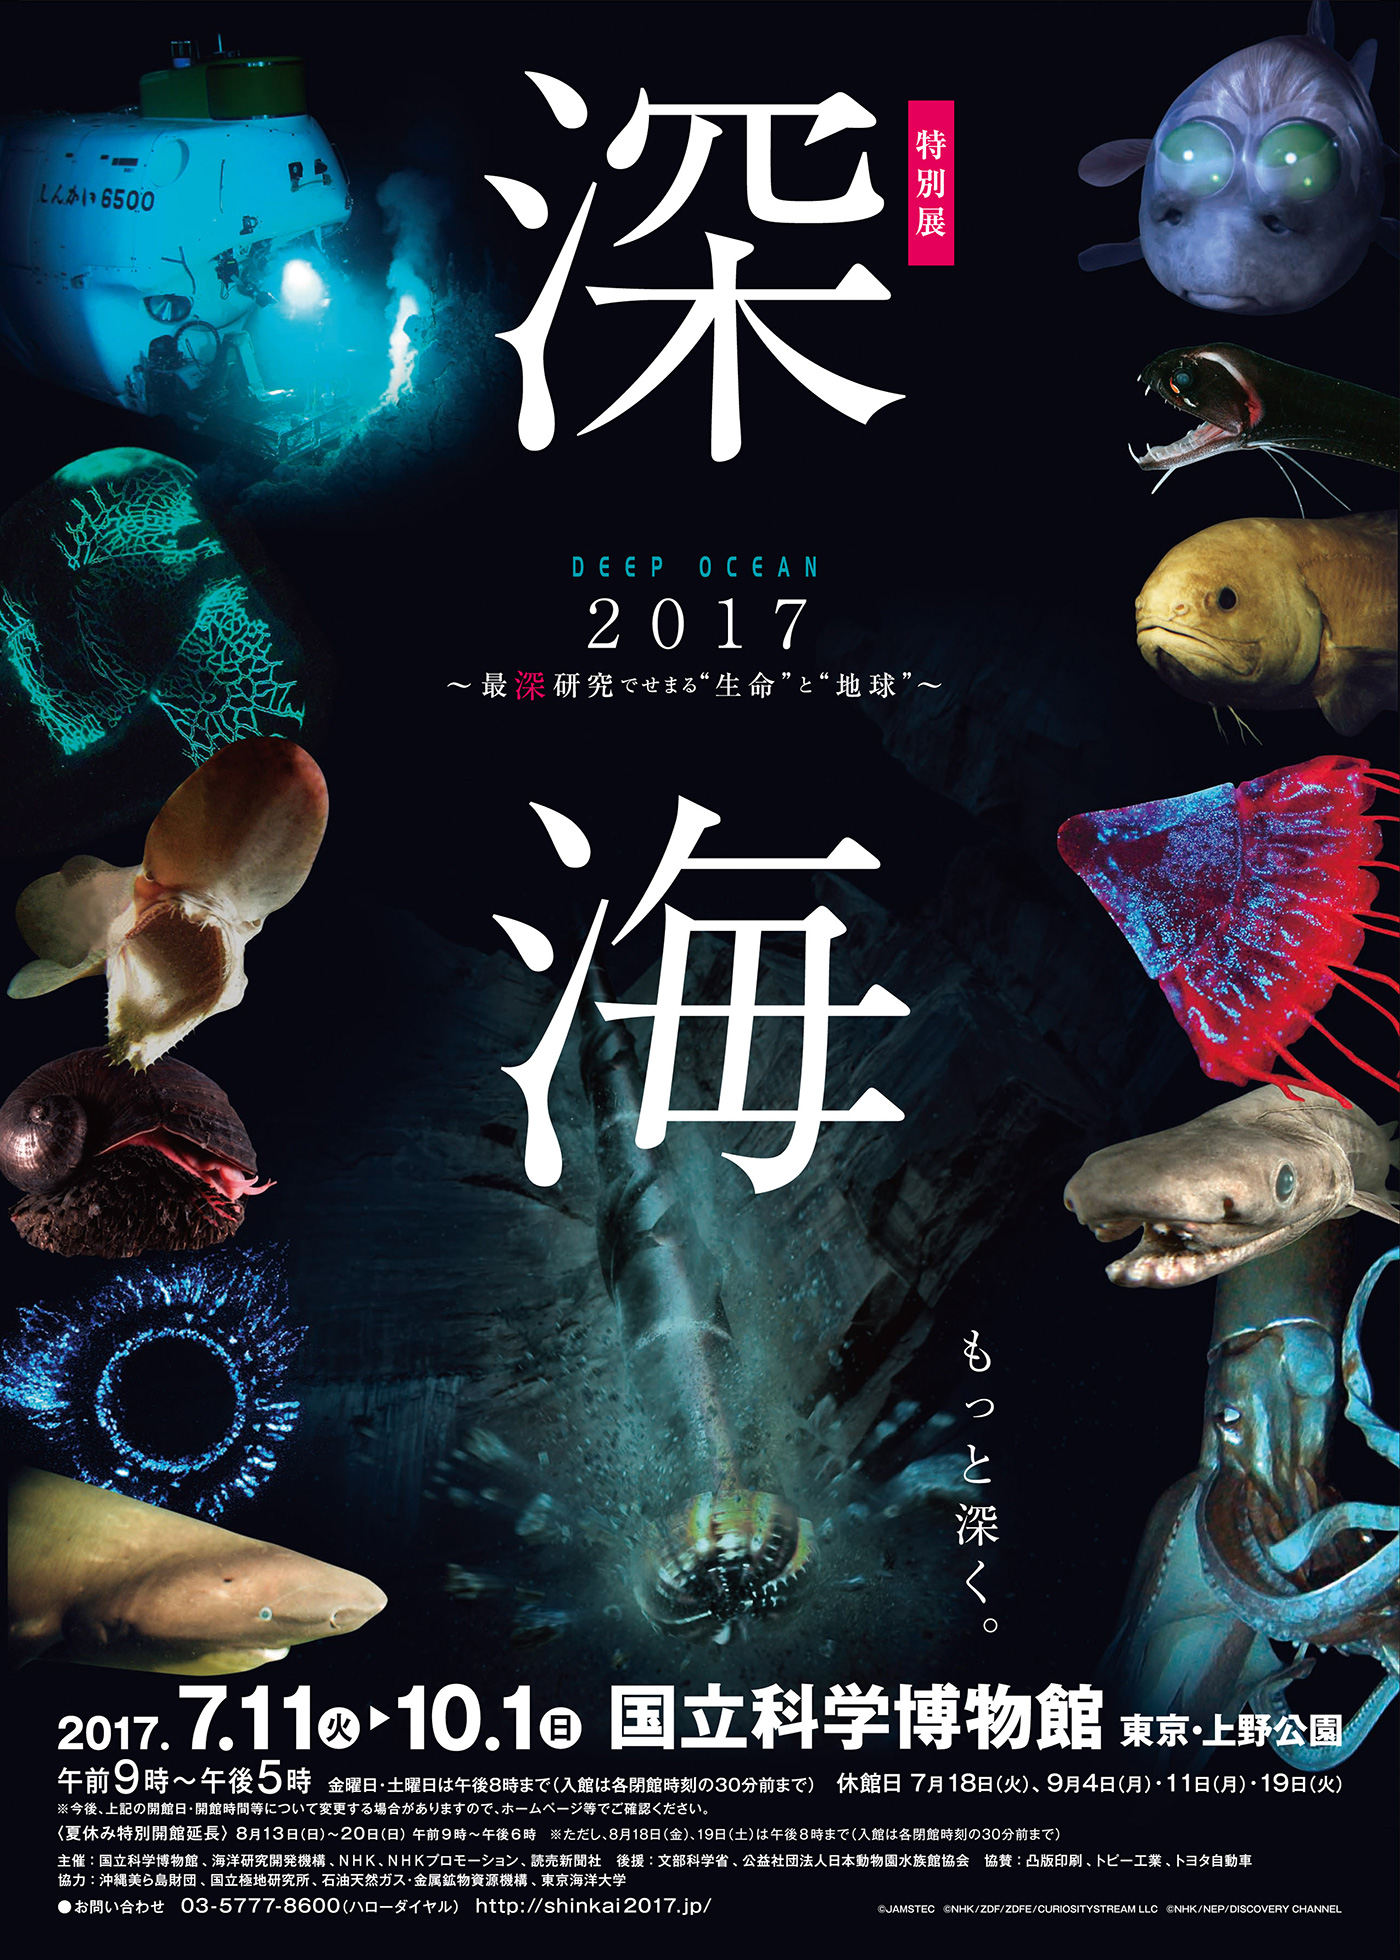 国立科学博物館で「深海2017」開催